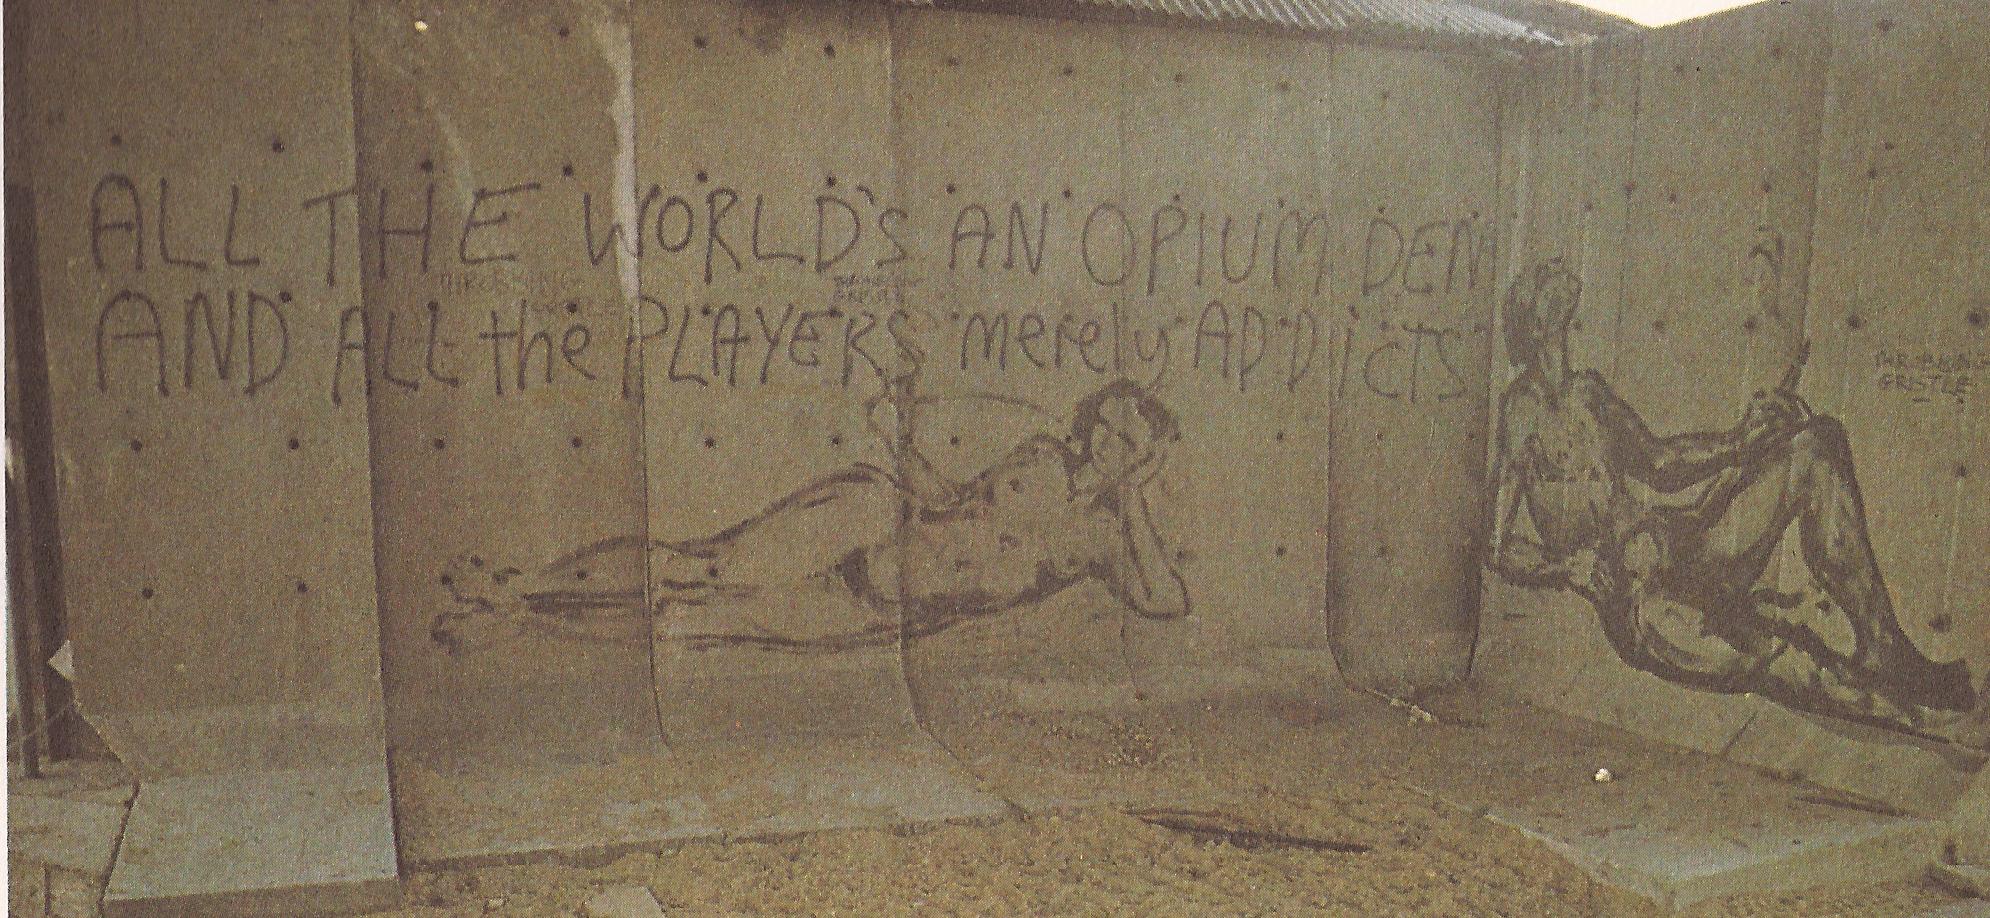 graffiti opium den